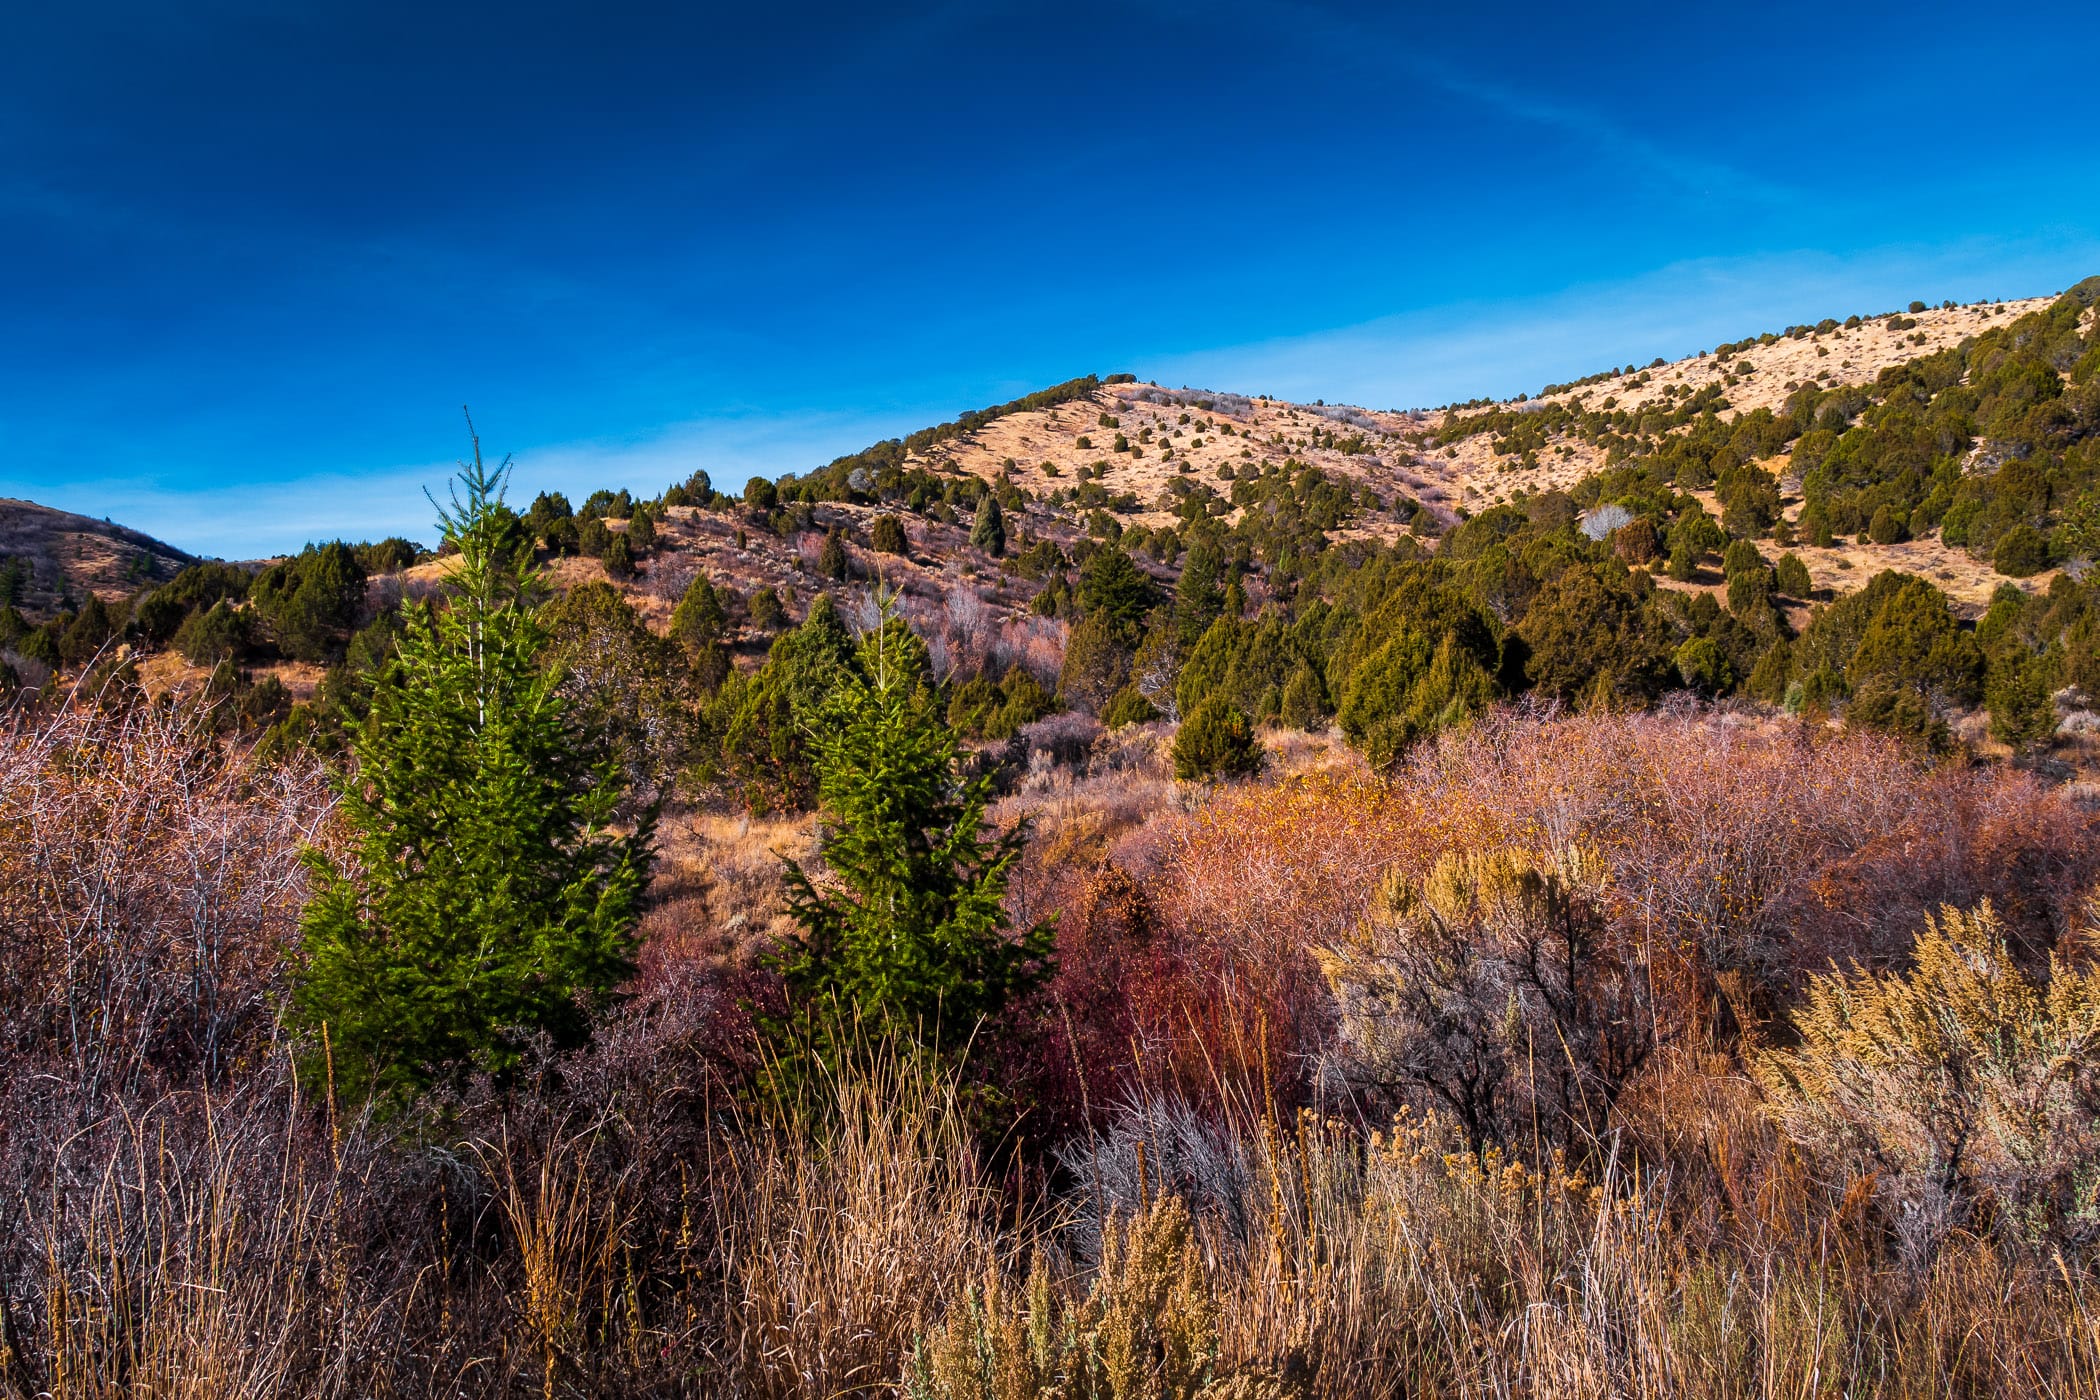 The hilly landscape of Cherry Springs Nature Area near Pocatello, Idaho.